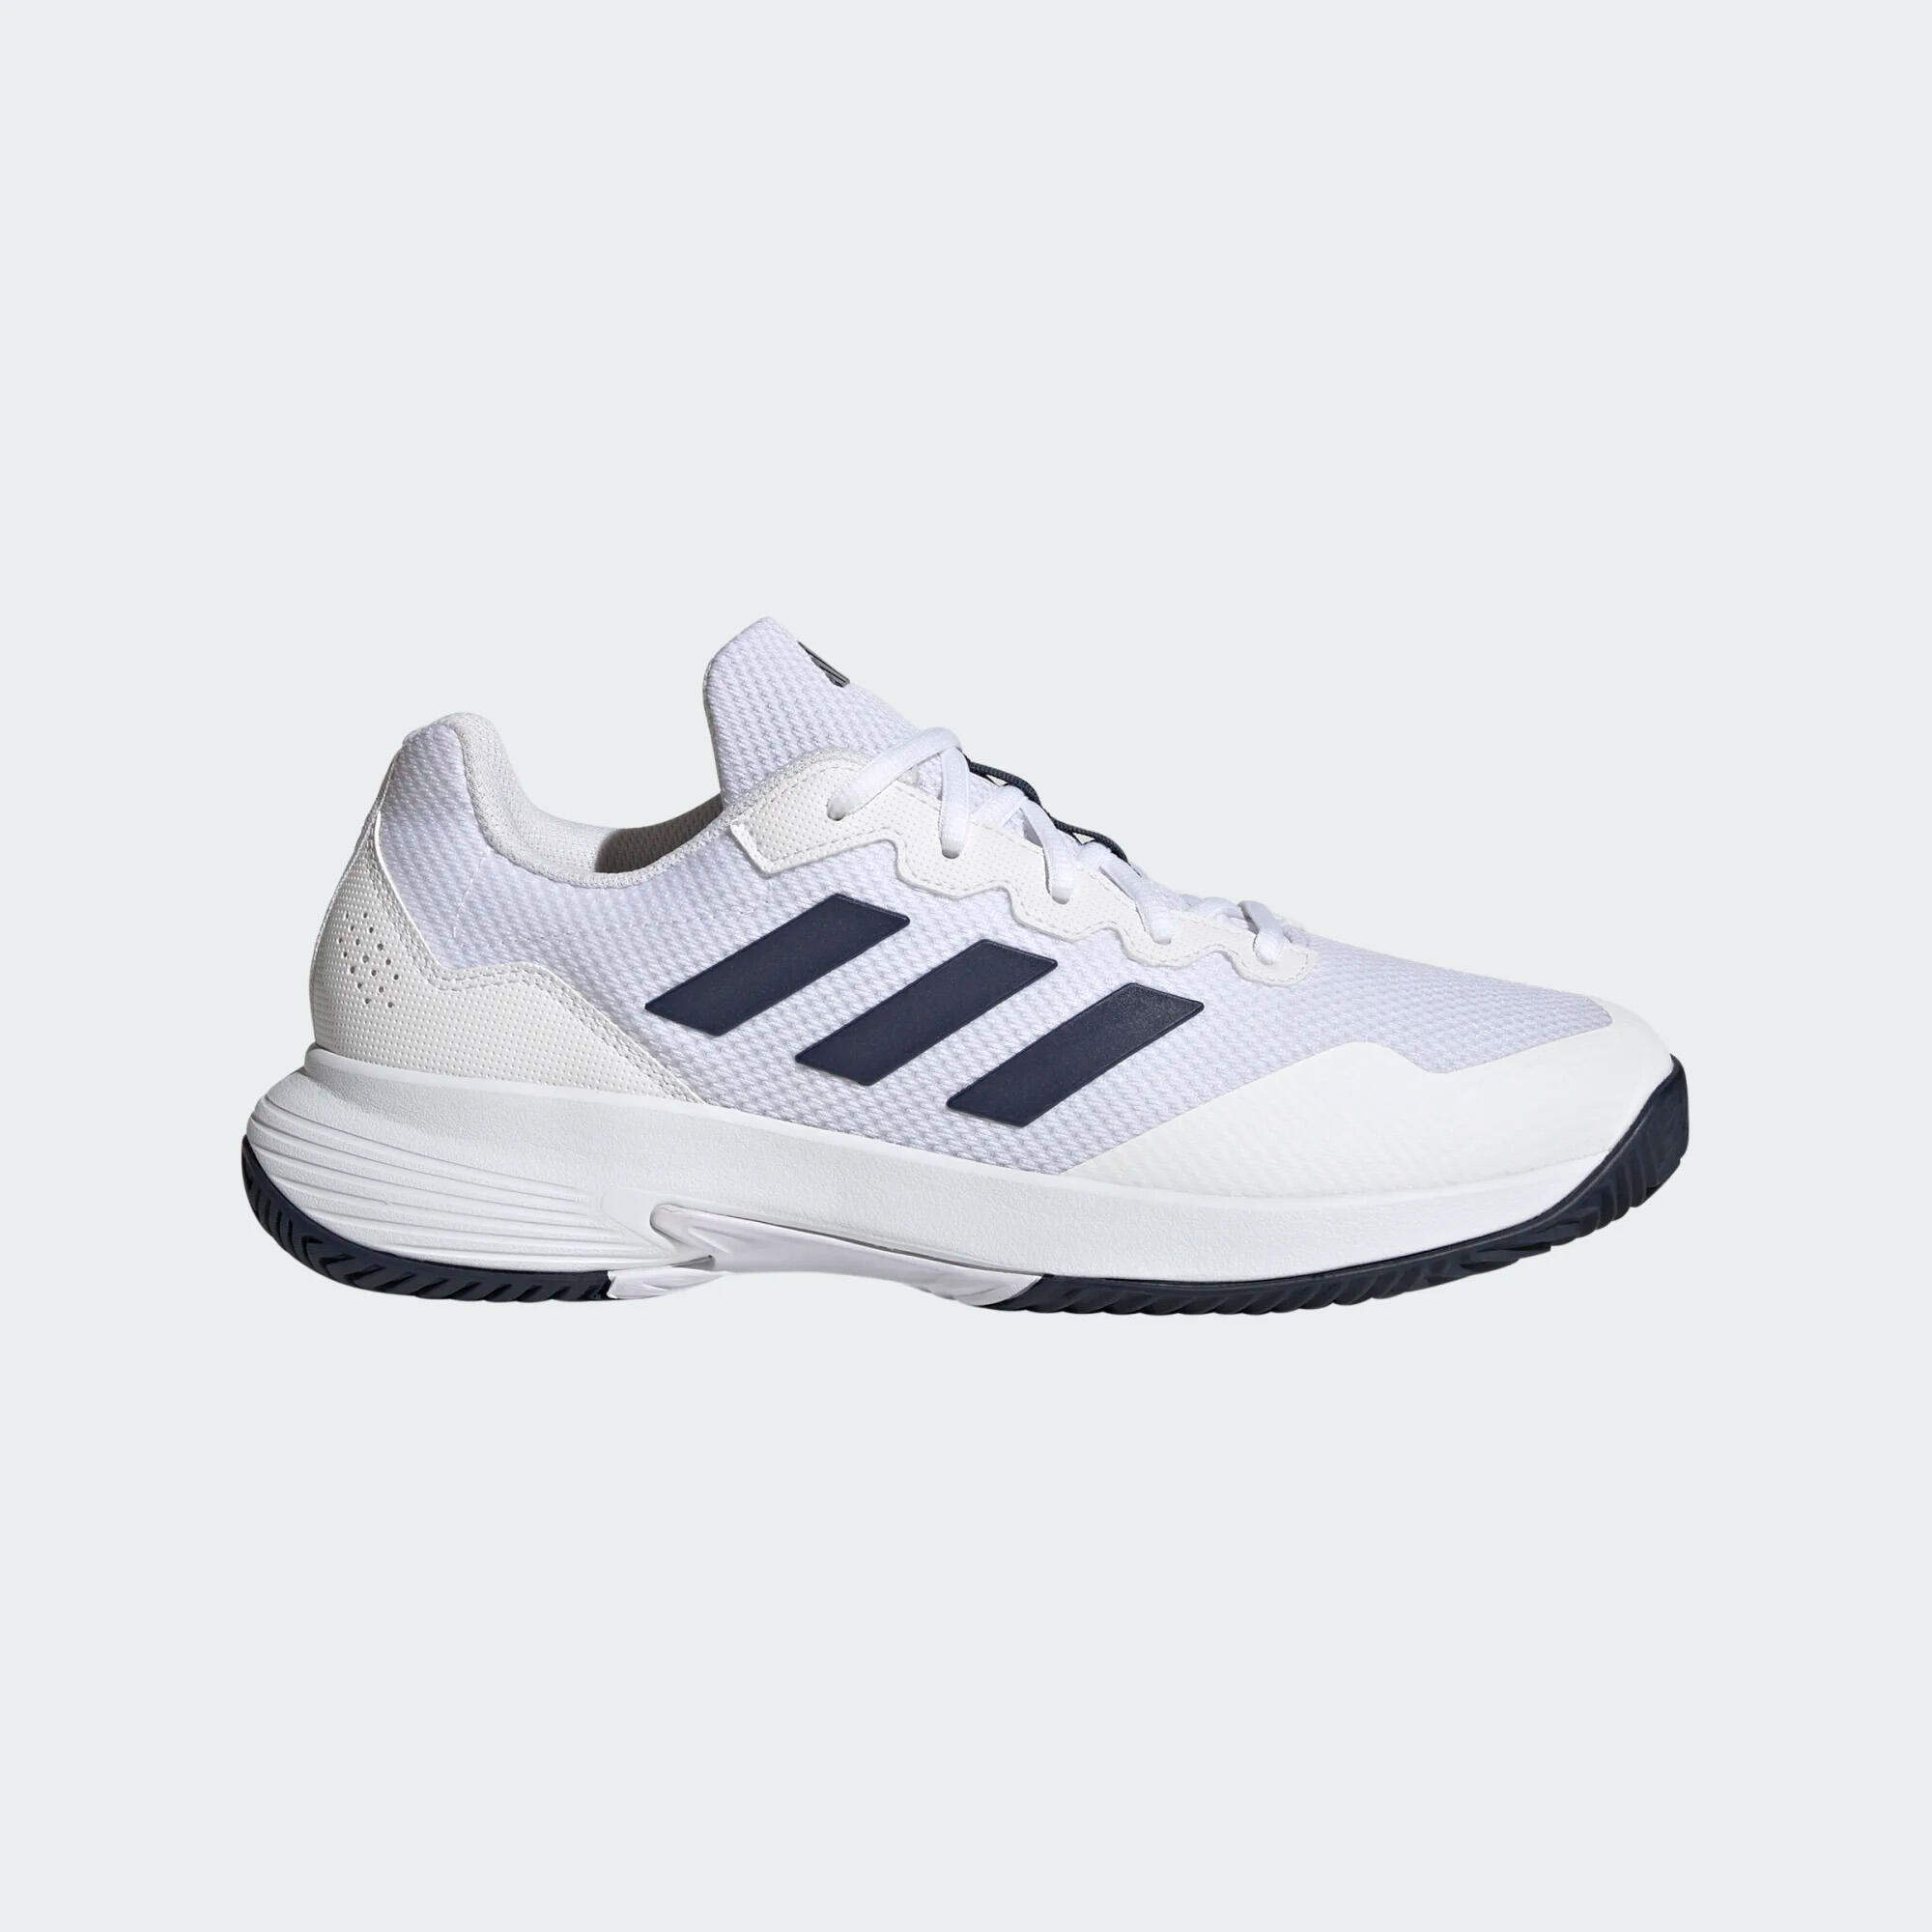 ADIDAS Men's Multicourt Tennis Shoes Gamecourt - White